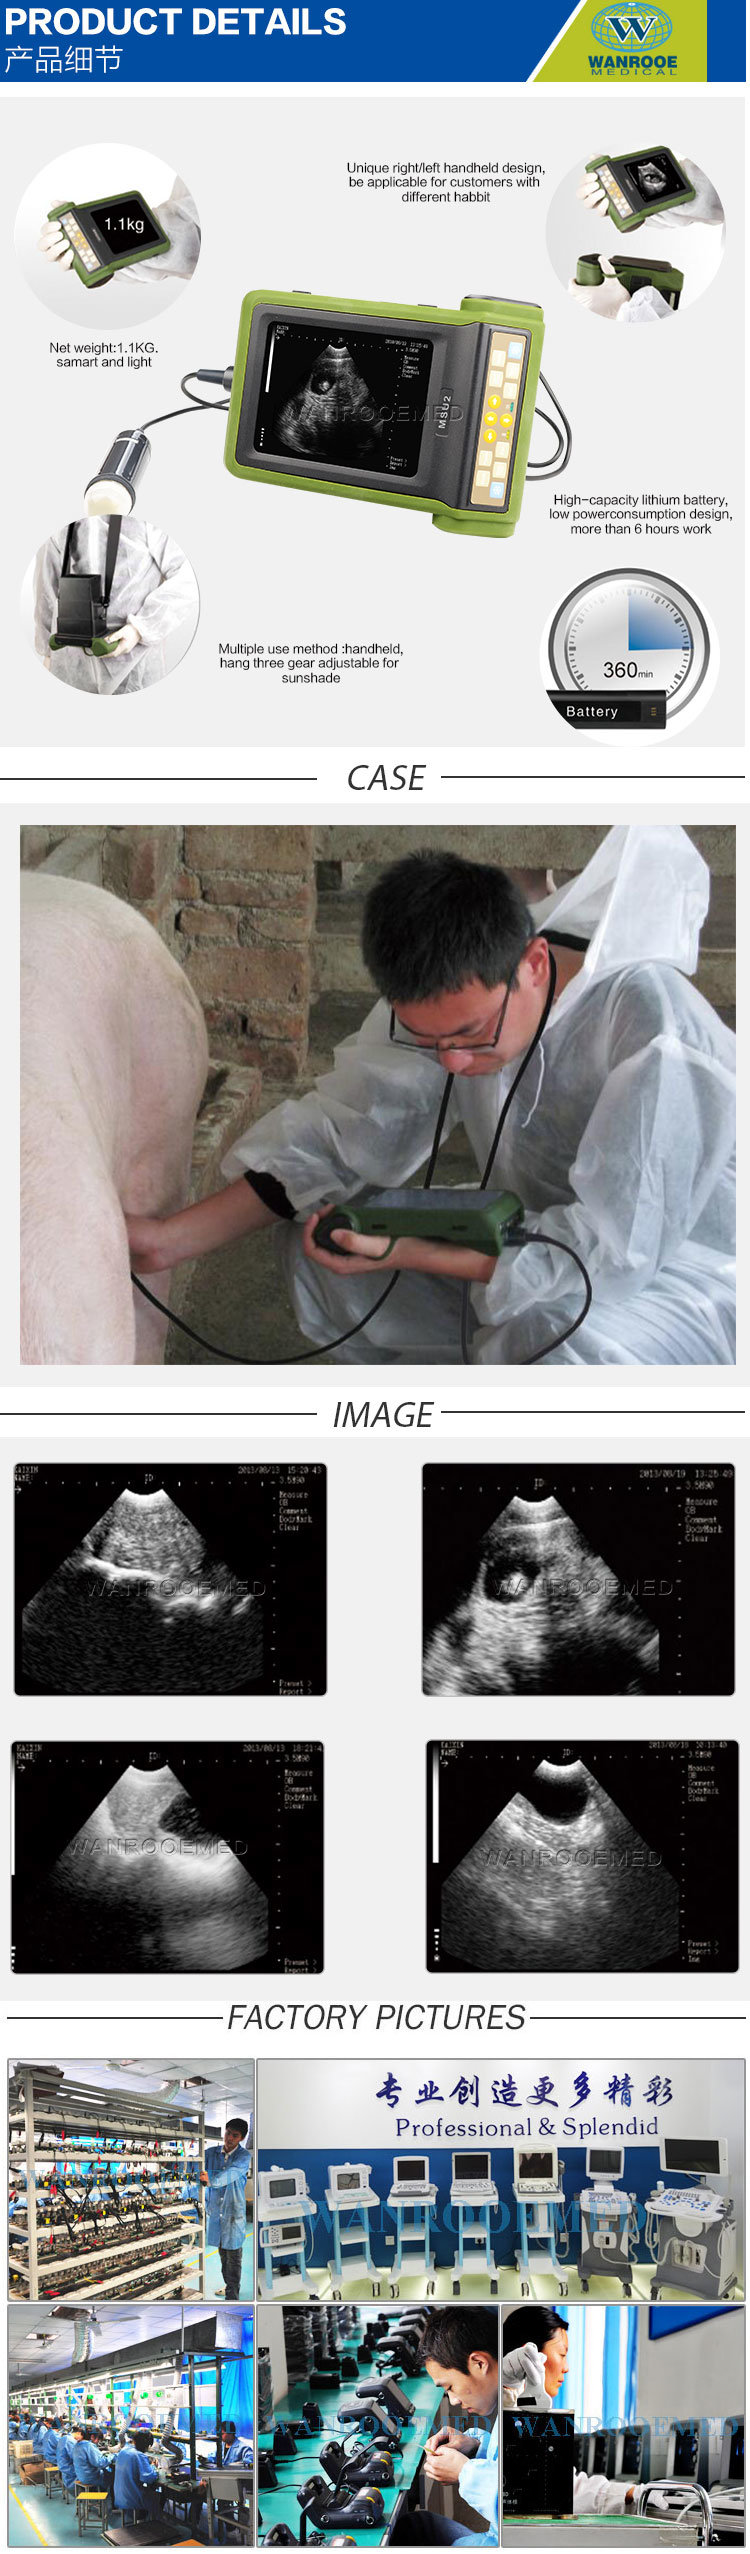 Usmsu2 Medical Portable Veterinary Ultrasound Detector Scanner for Ovine Swine